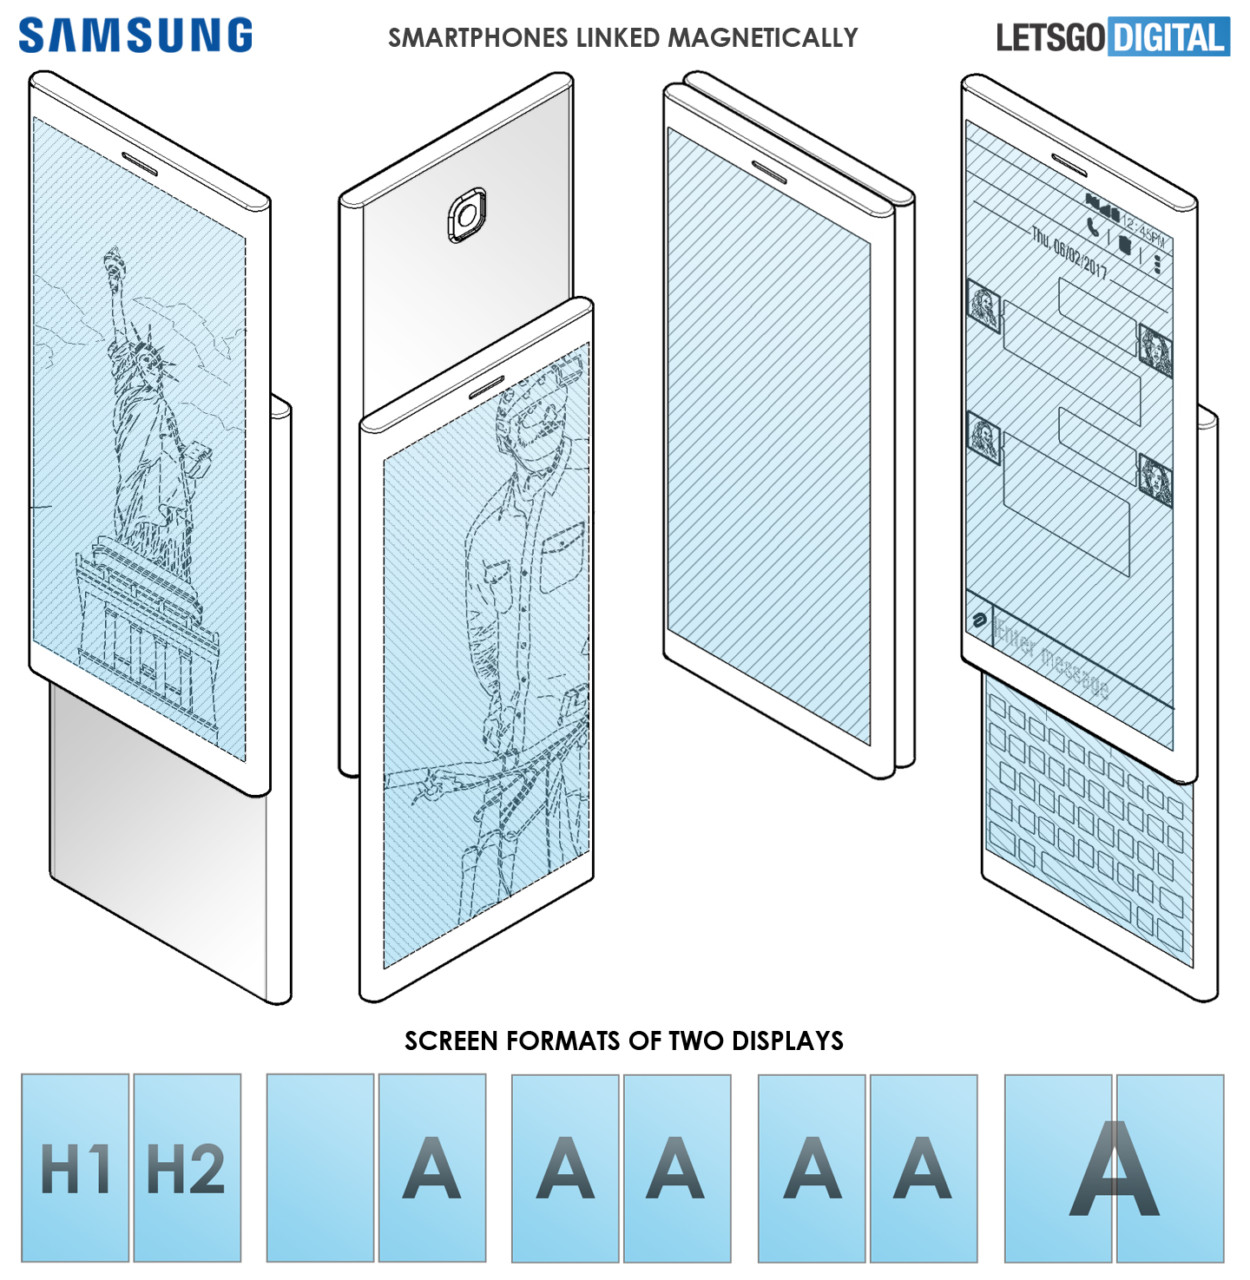 Samsung Magnetic Smartphone Patent